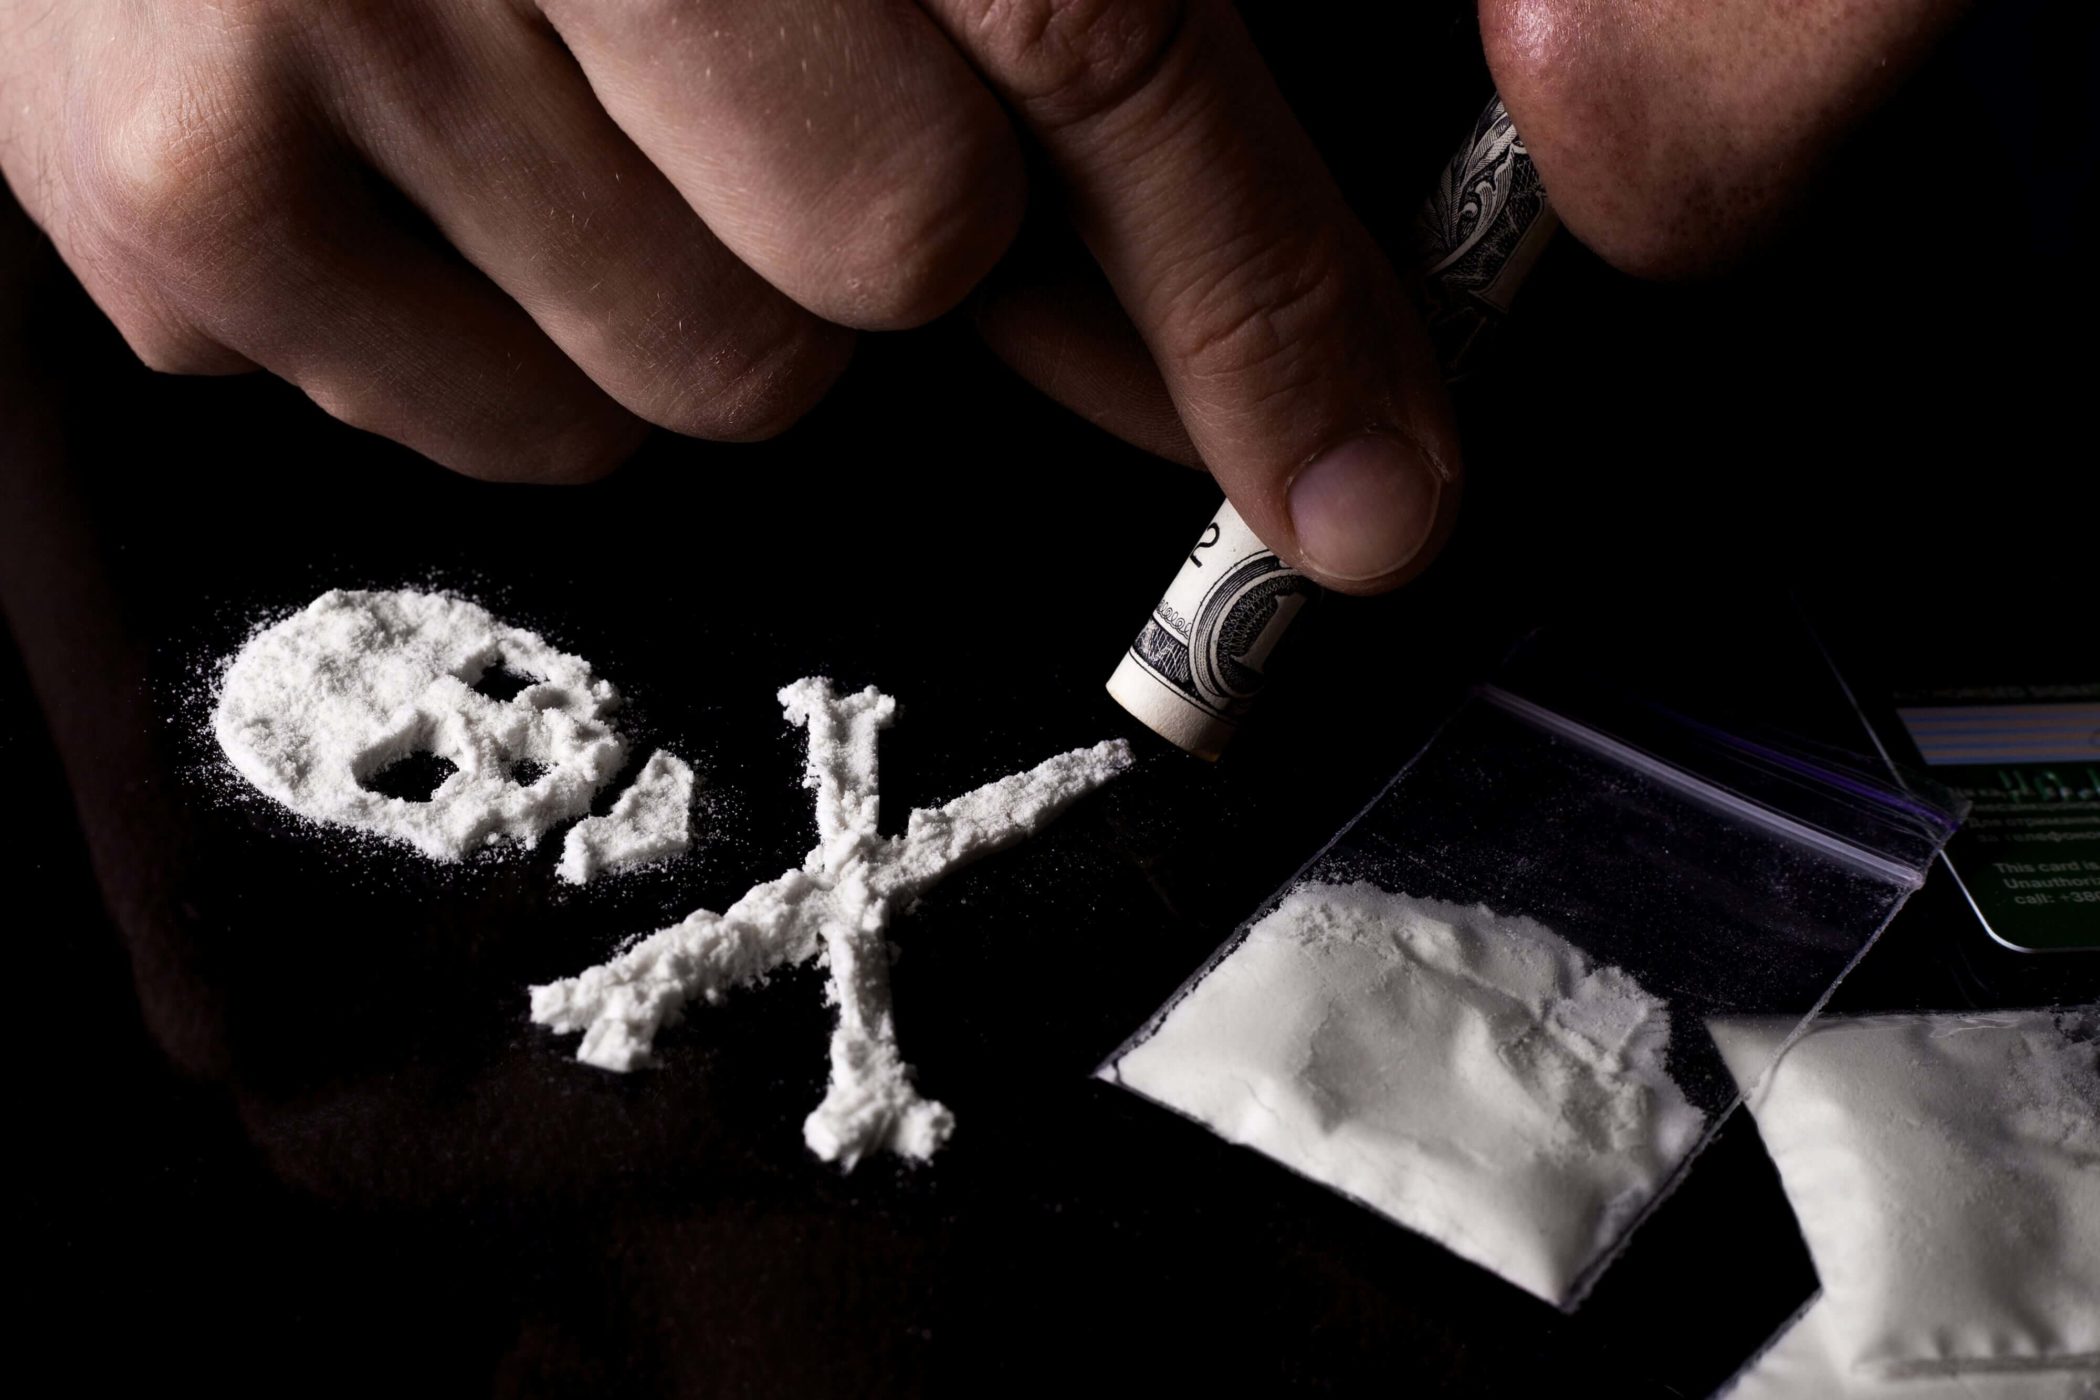 buy cocaine online in canada